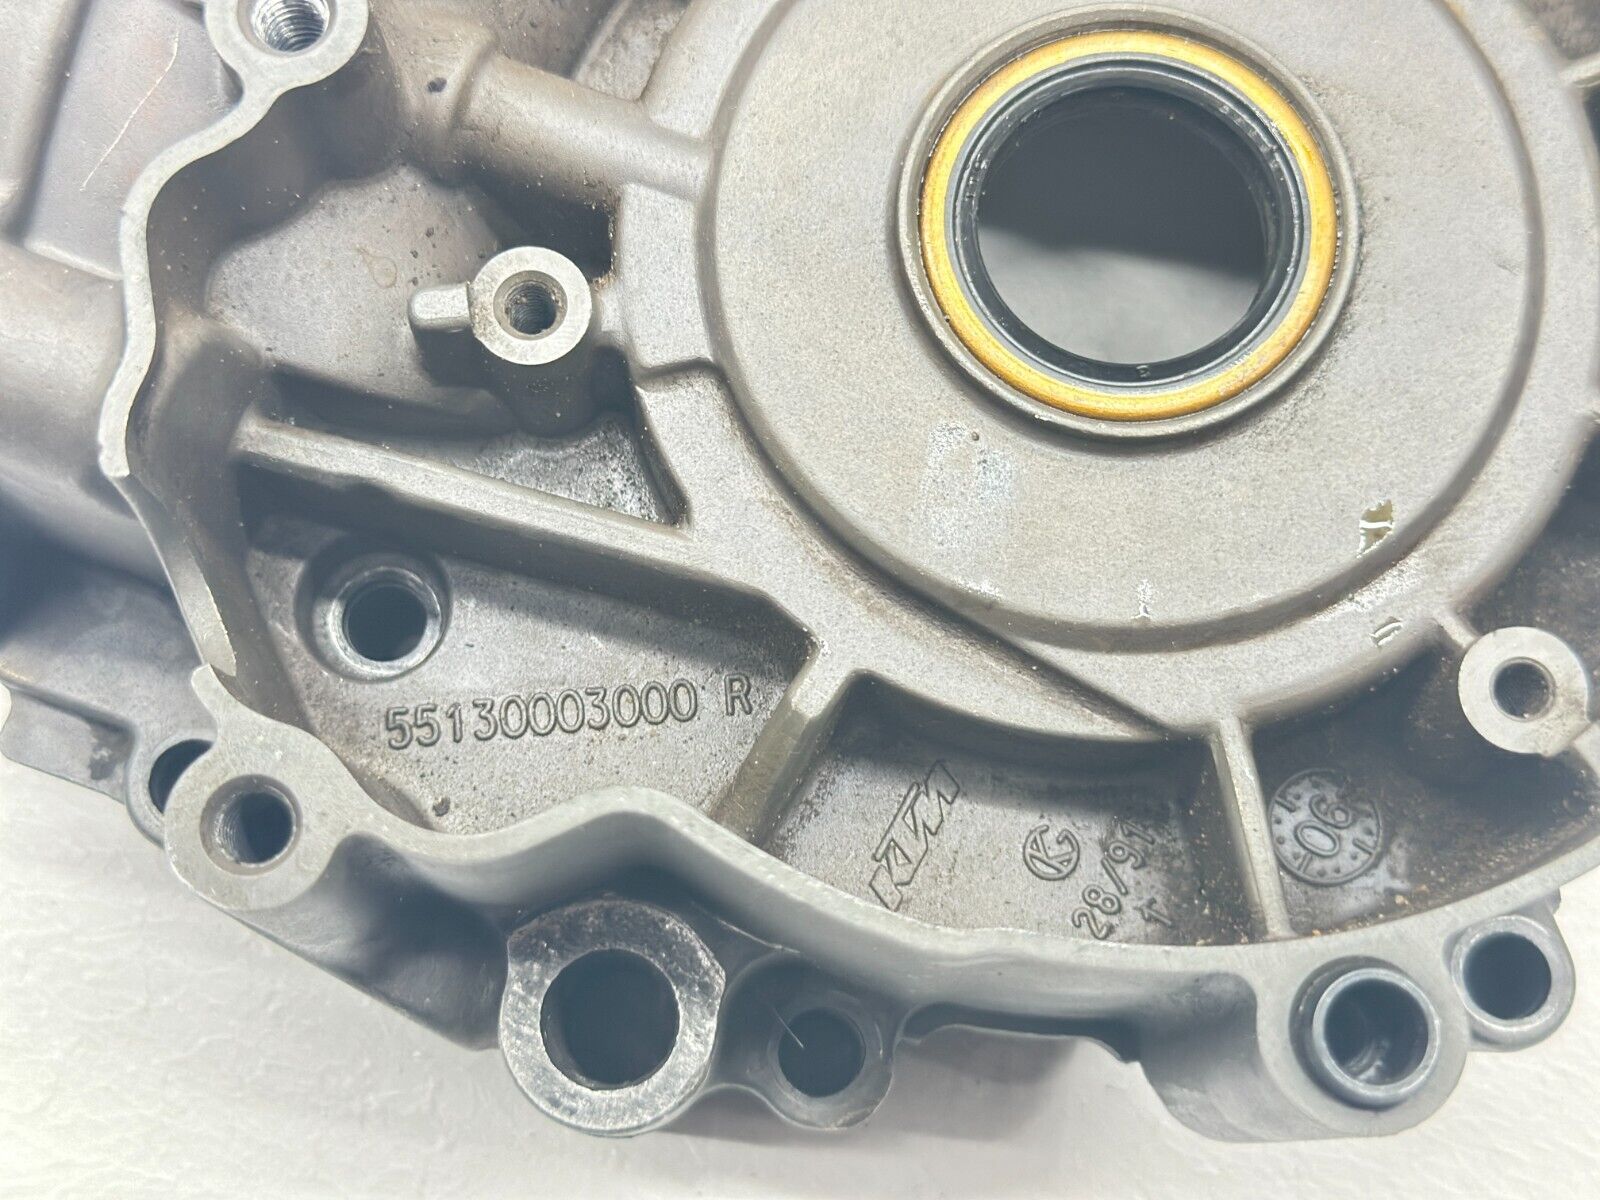 2008 KTM 300XC Left Side Engine Crankcase Engine Motor Half Case Bottom End XC